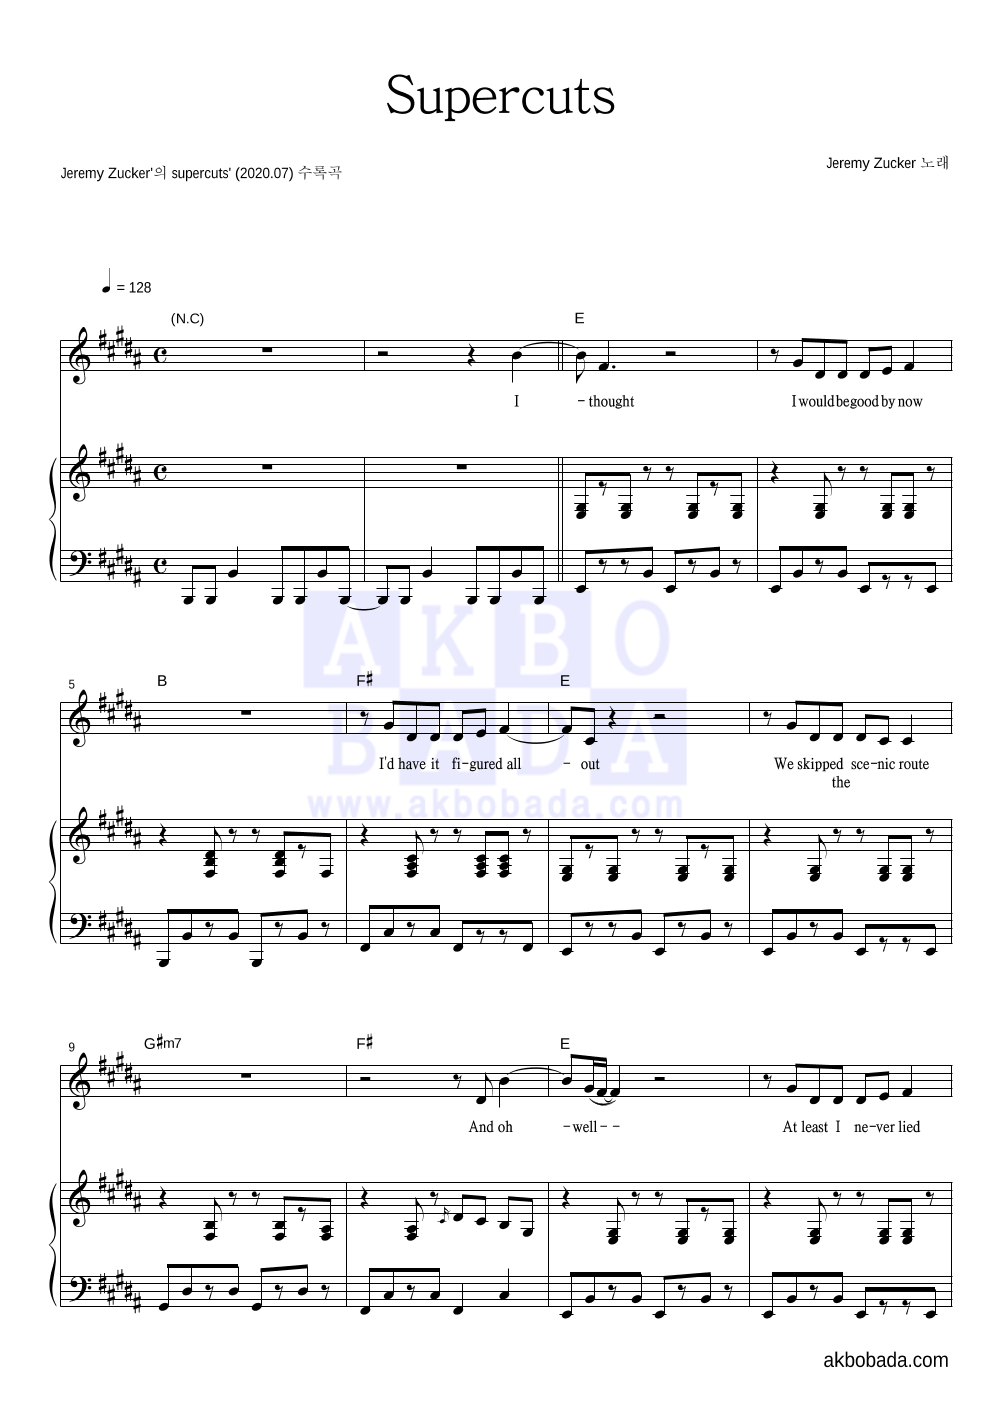 Jeremy Zucker - Supercuts 피아노 3단 악보 